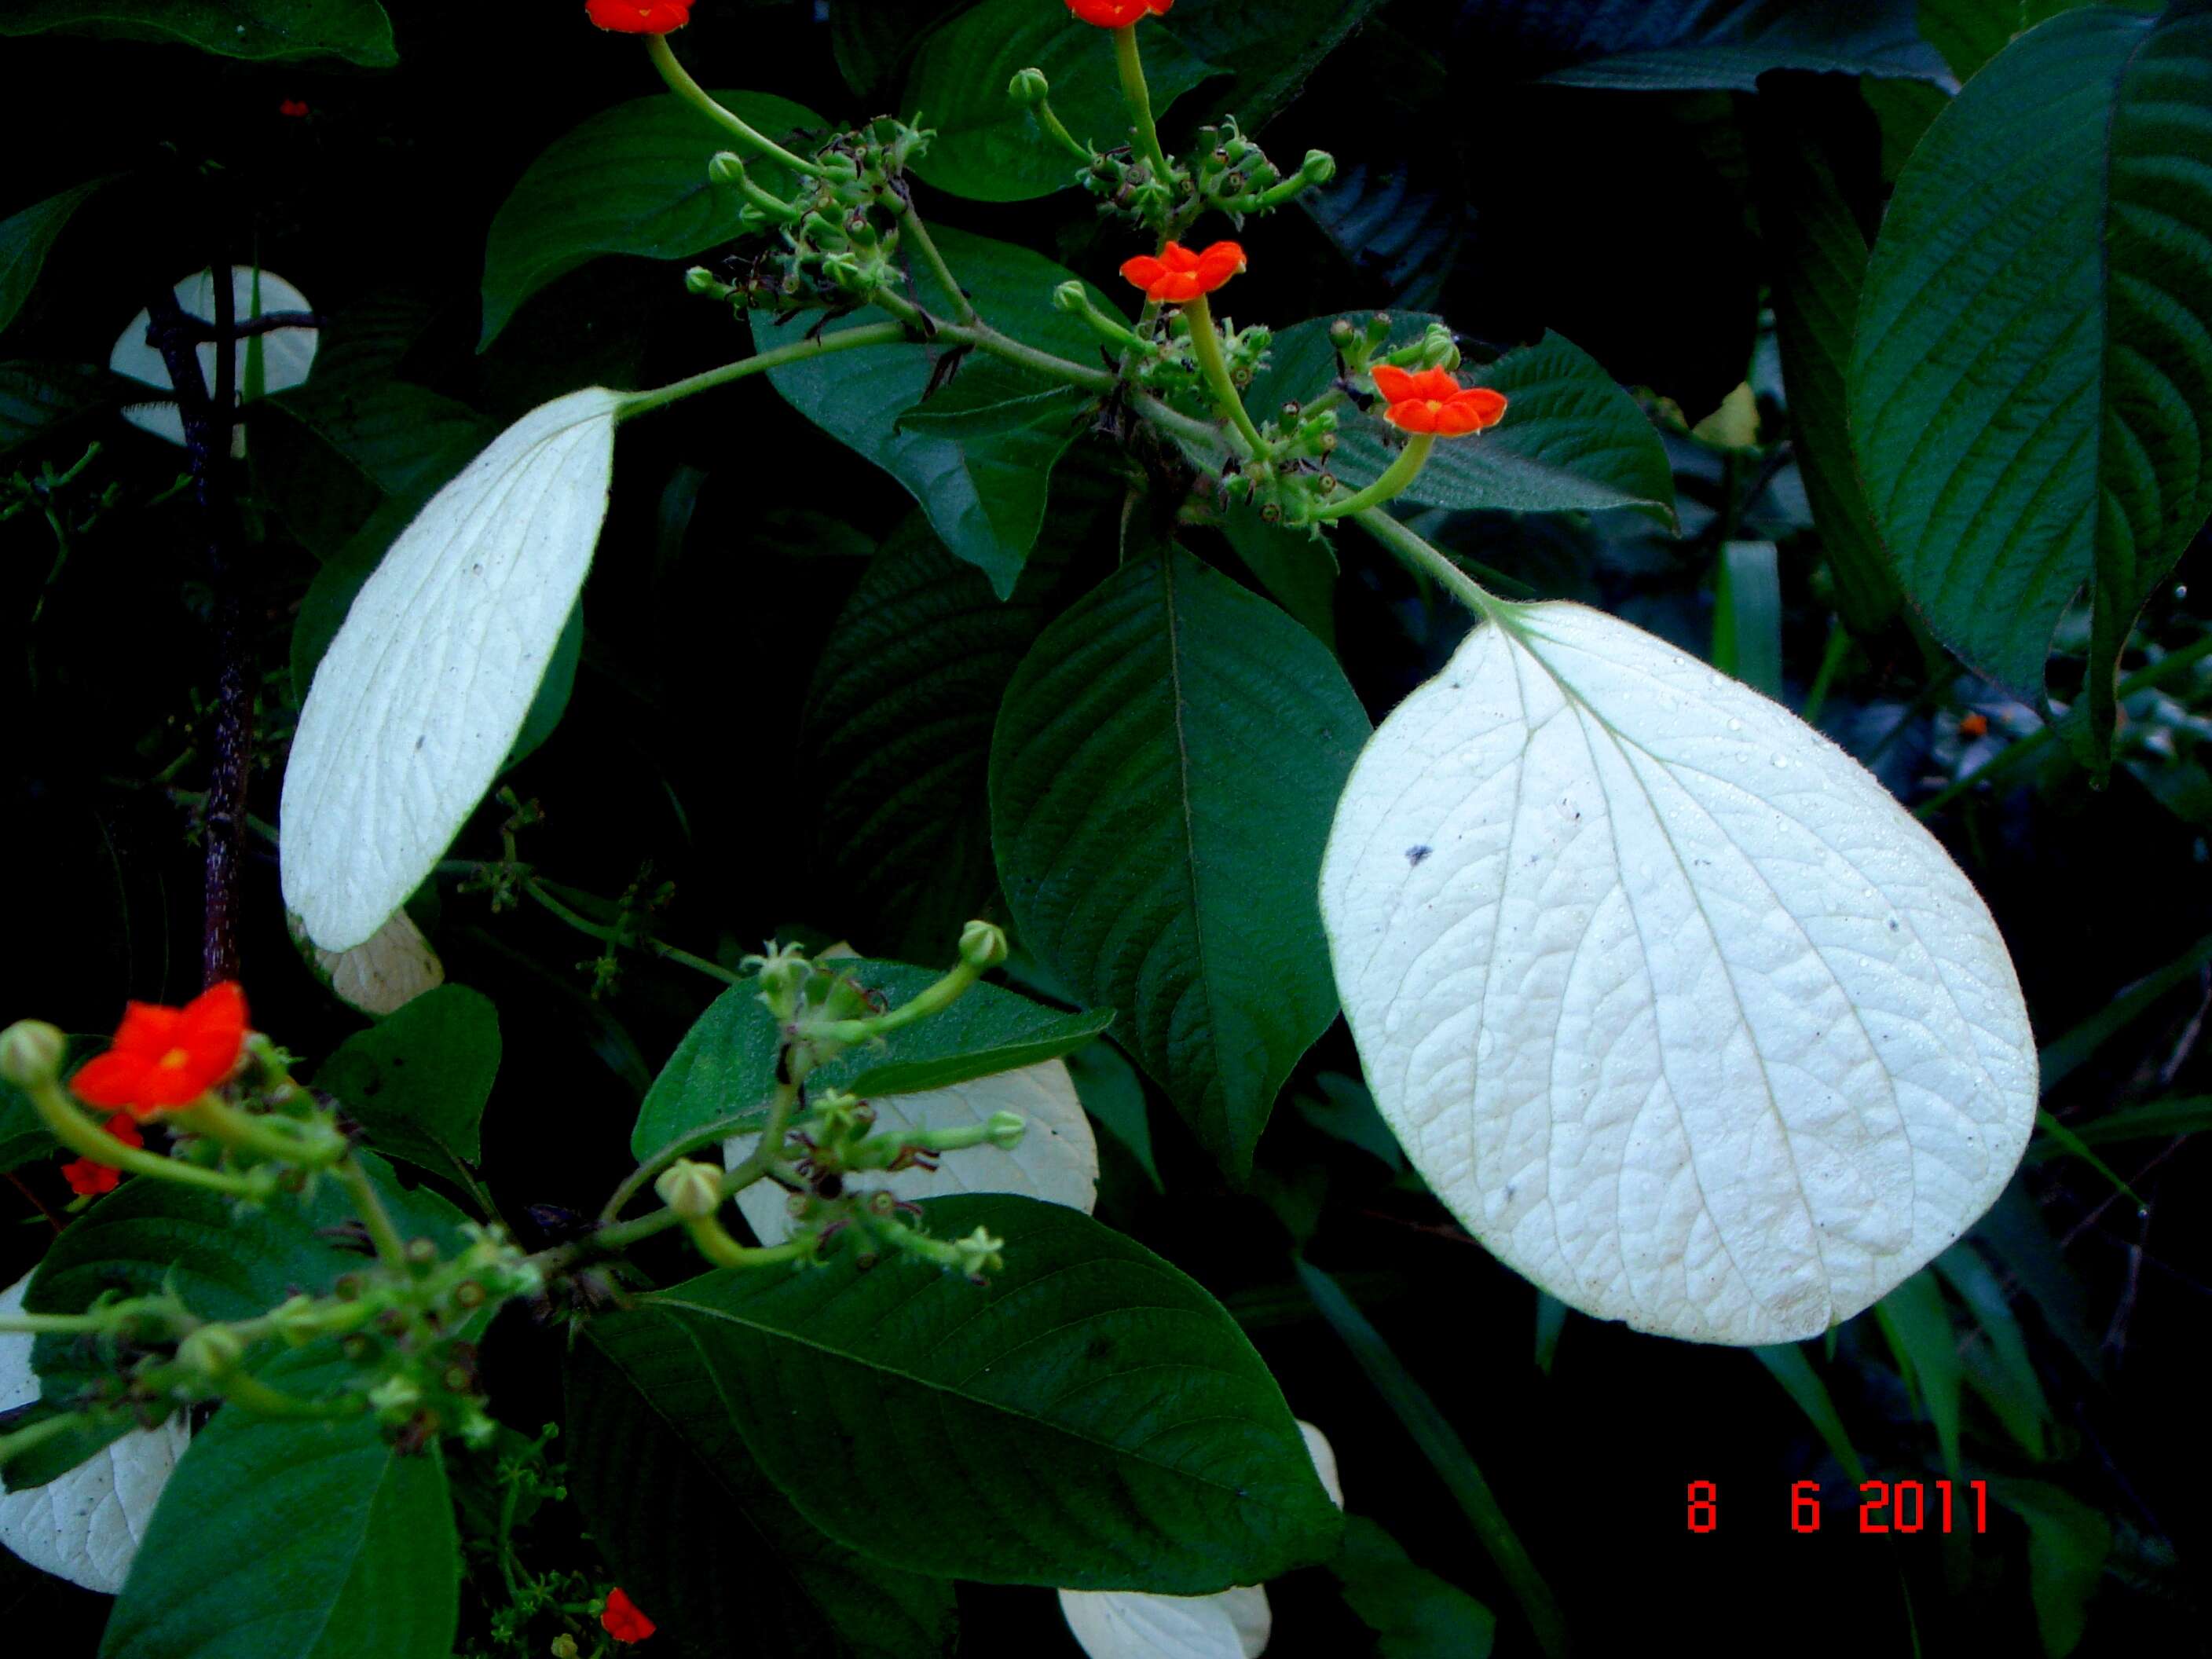 Image of White flag bush